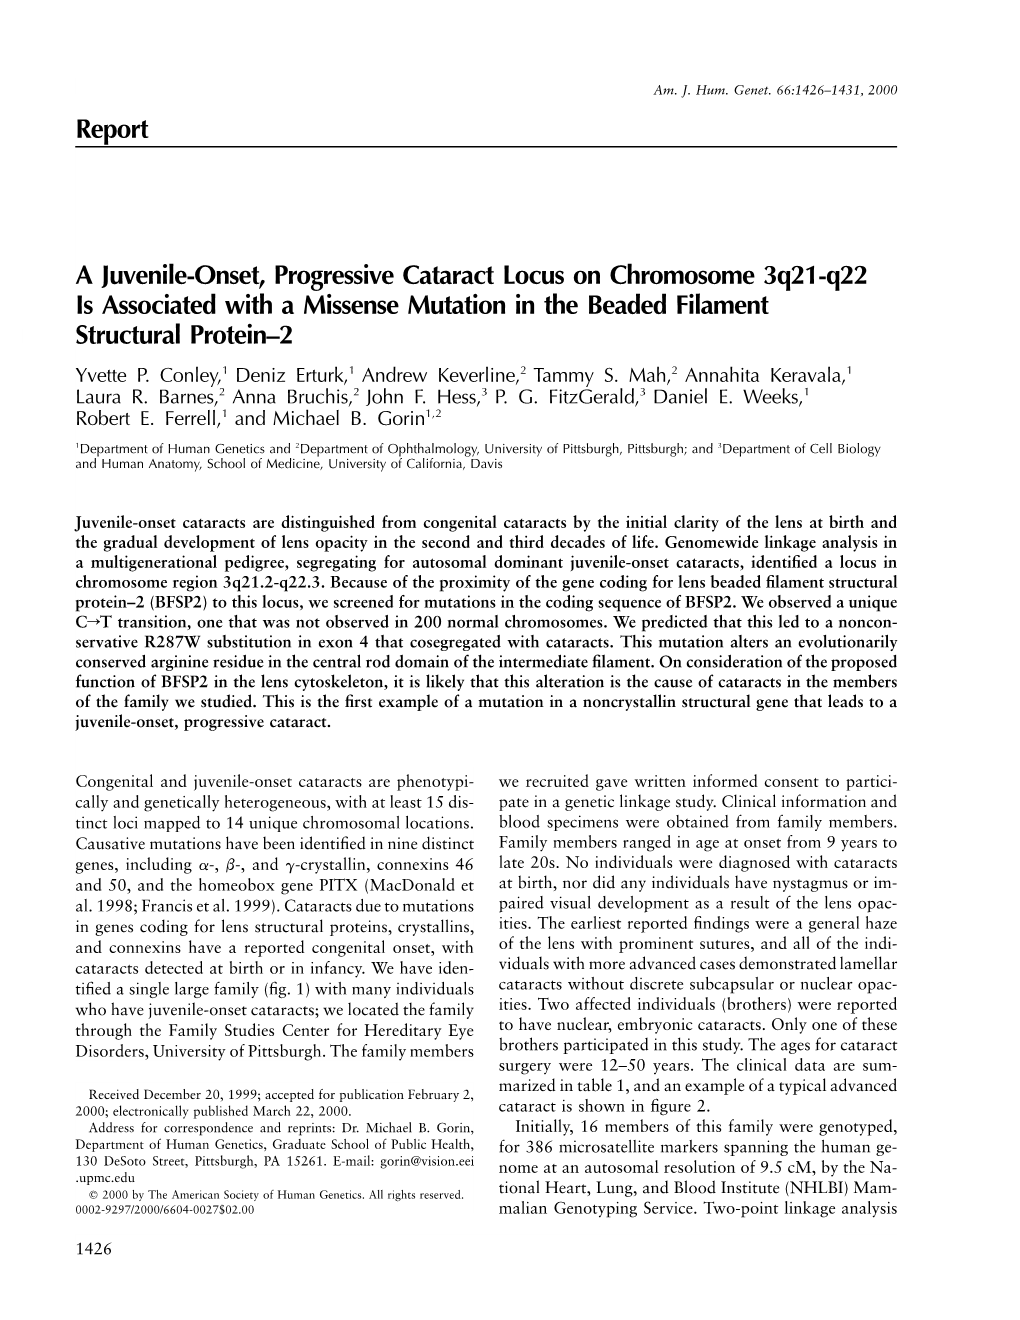 Report a Juvenile-Onset, Progressive Cataract Locus on Chromosome